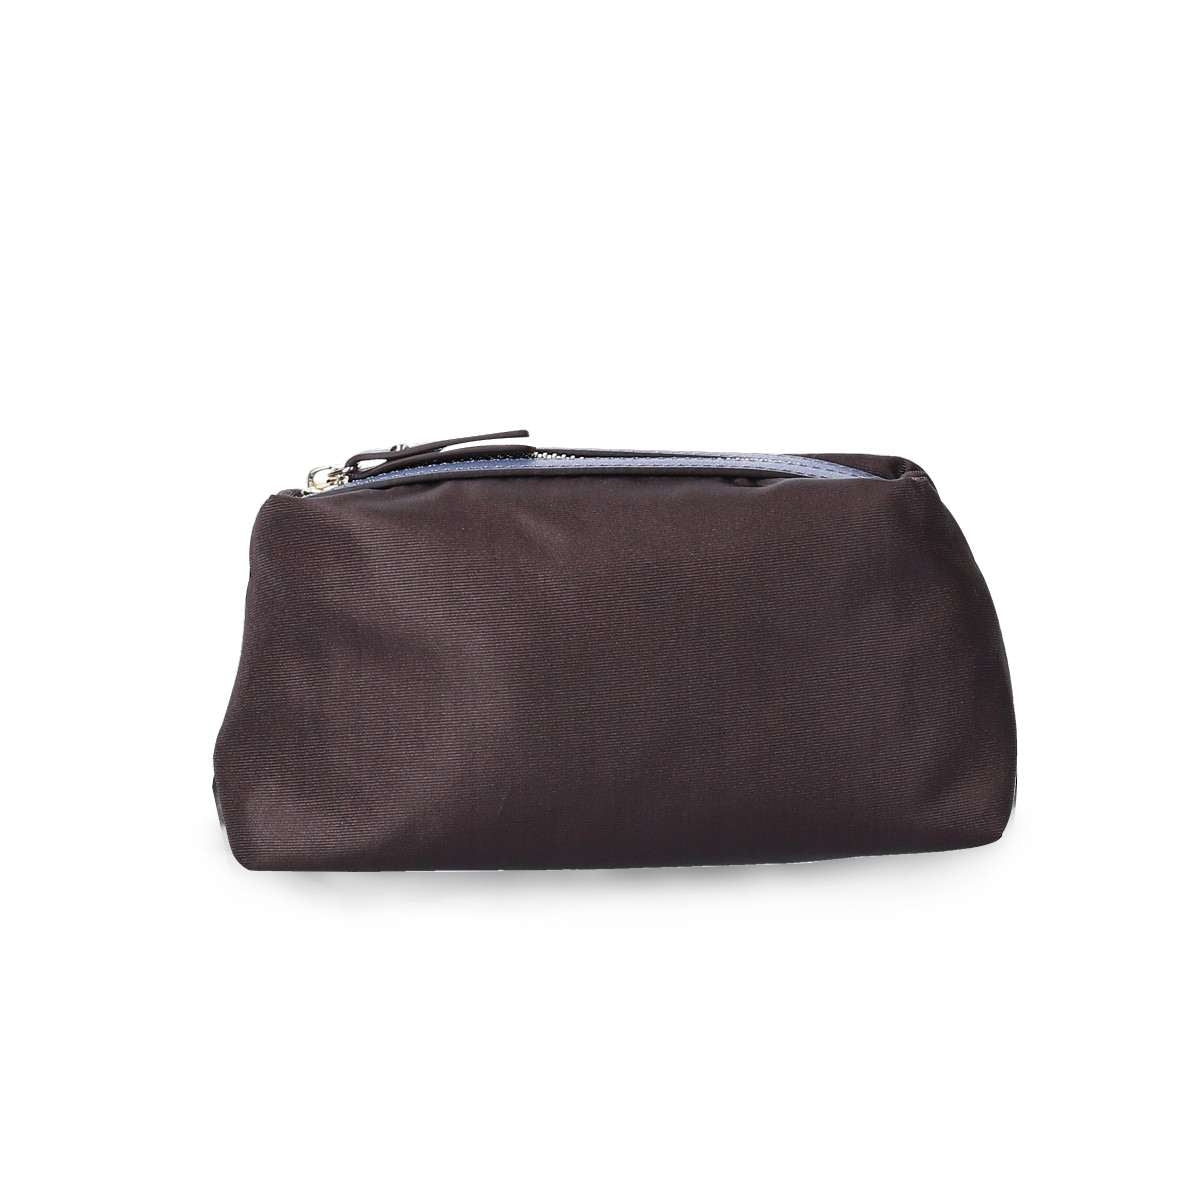 2 Way Leather Handbag with Cute Belt Design